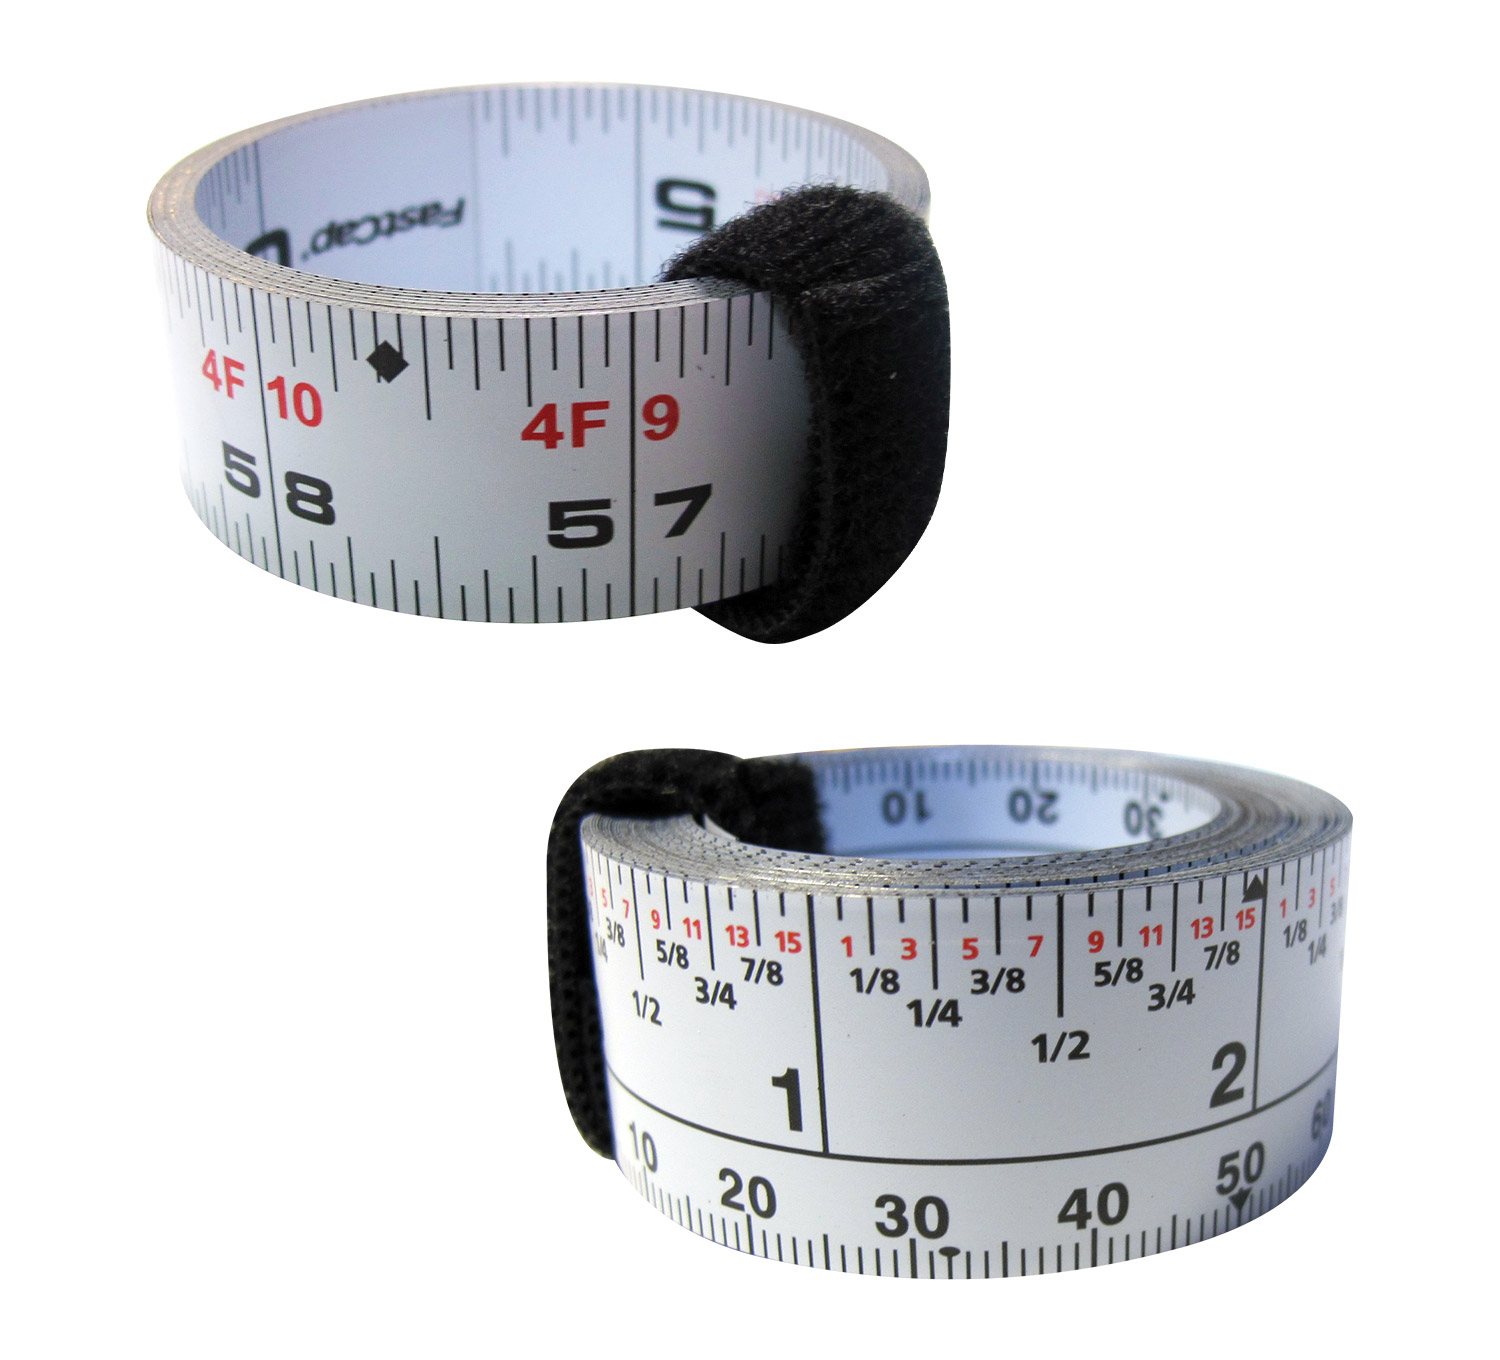 2 Self-Adhesive Measuring Tapes (1.5 meters)